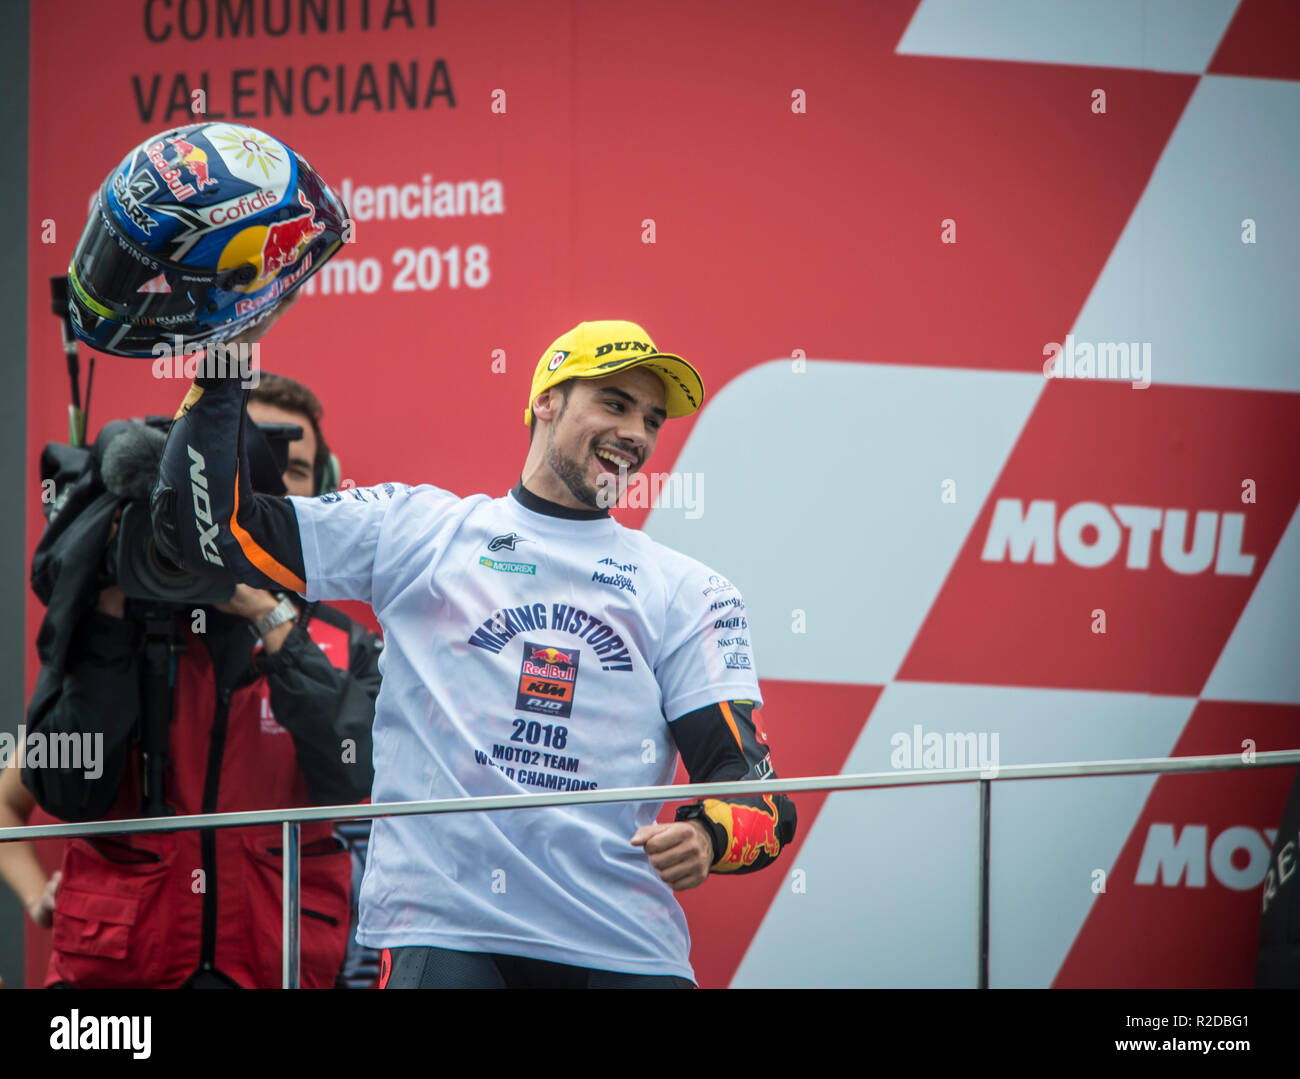 Cheste, Valencia, Spain. 18th Nov, 2018. GP Comunitat Valenciana Moto GP.Miguel Oliveira of KTM team celebrates his victory in the podium after win moto 2 race. Credit: rosdemora/Alamy Live News Stock Photo